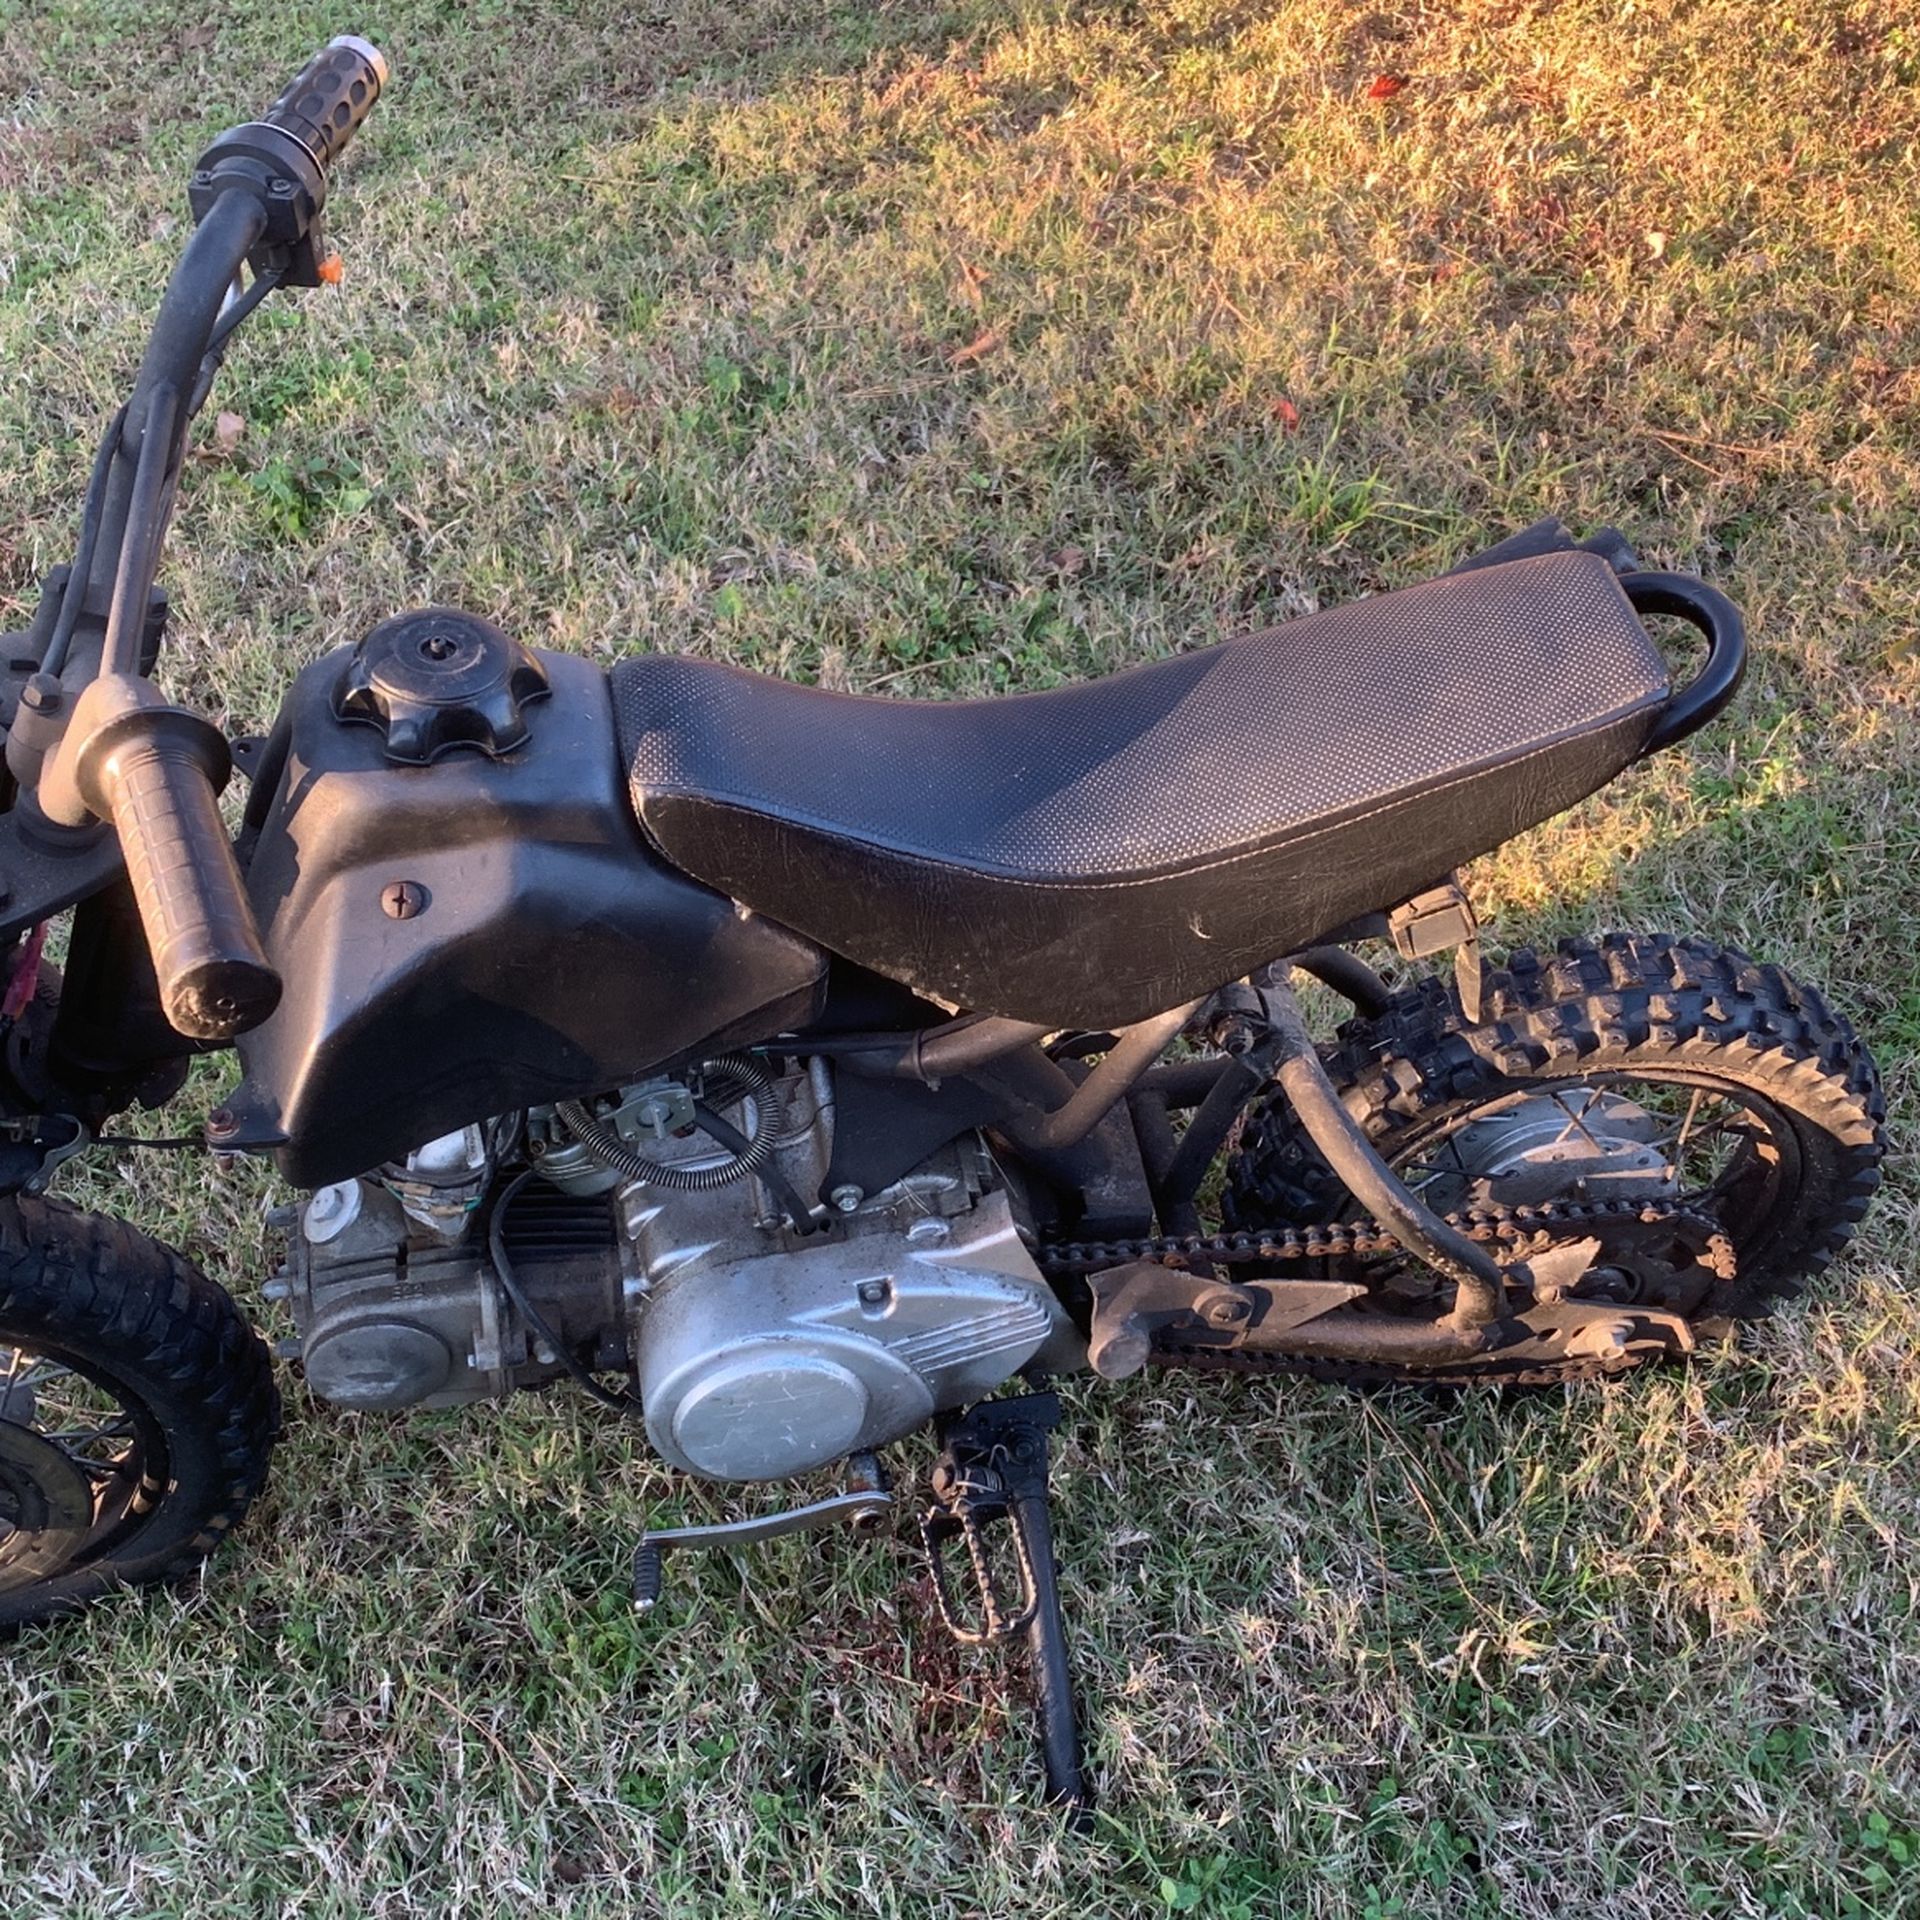 80cc Pocket Pit Dirt Bike Motorcycle